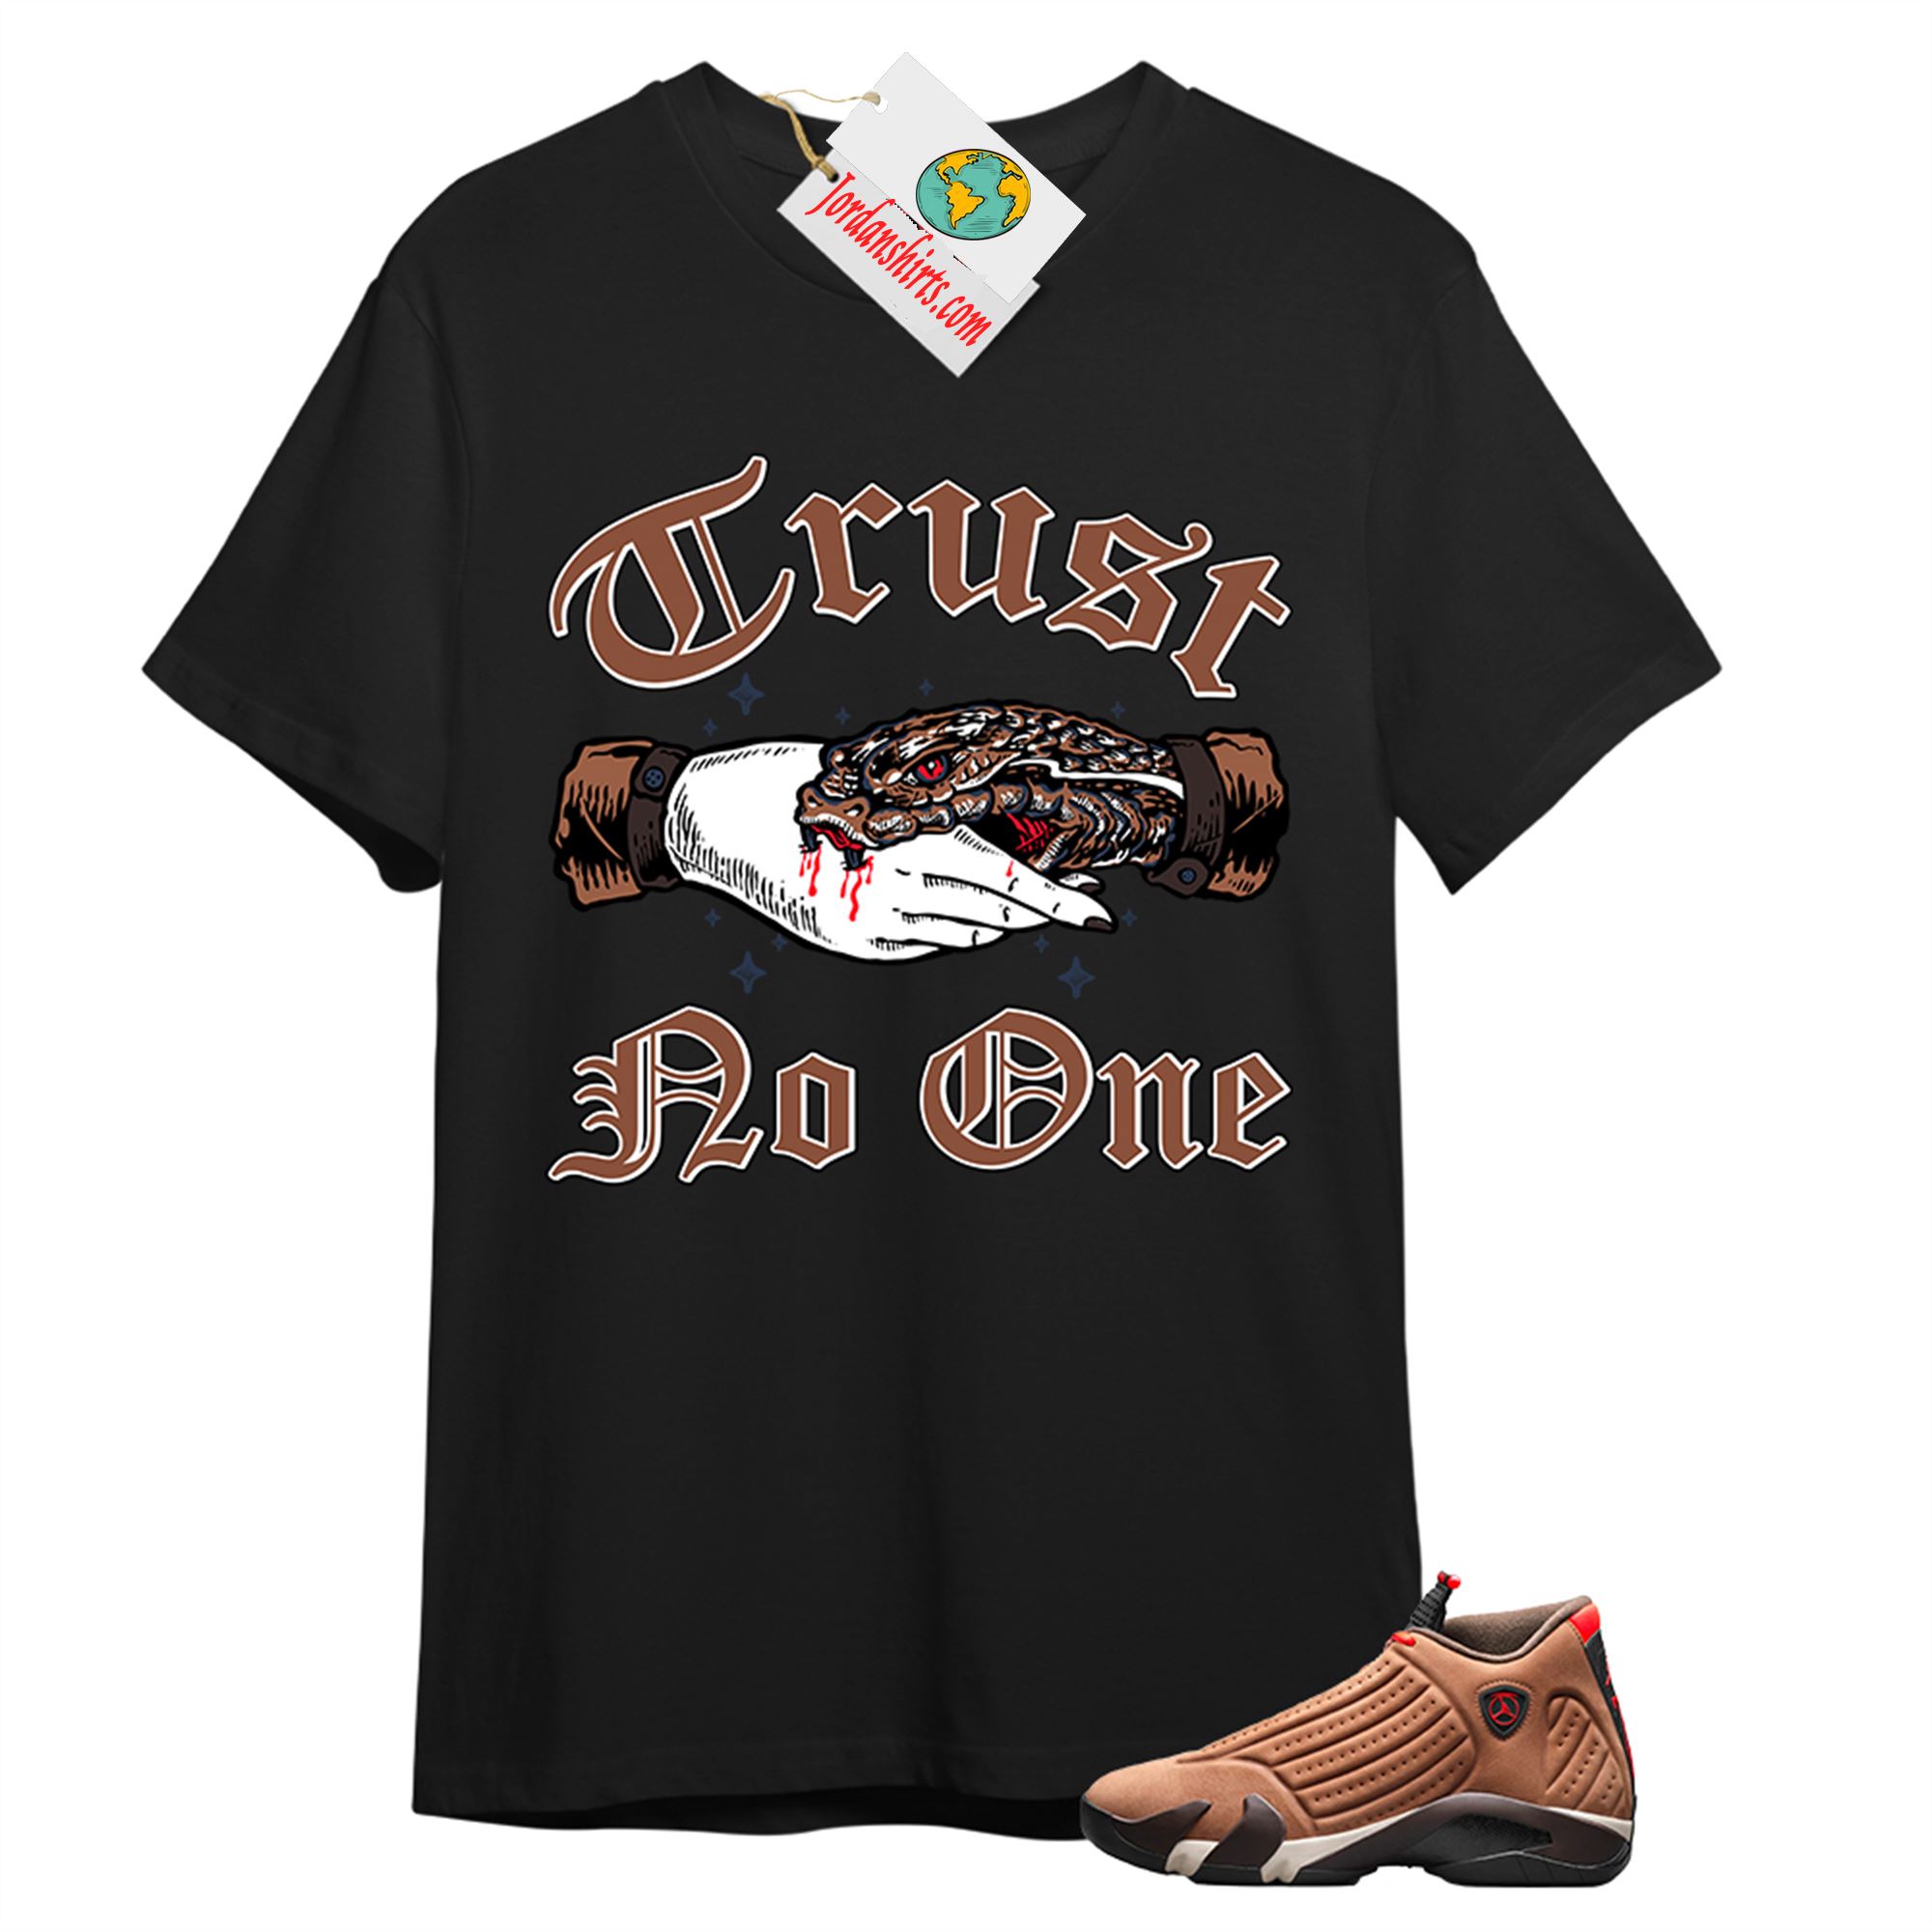 Jordan 14 Shirt, Trust No One Deal With Snake Black T-shirt Air Jordan 14 Winterized 14s Full Size Up To 5xl